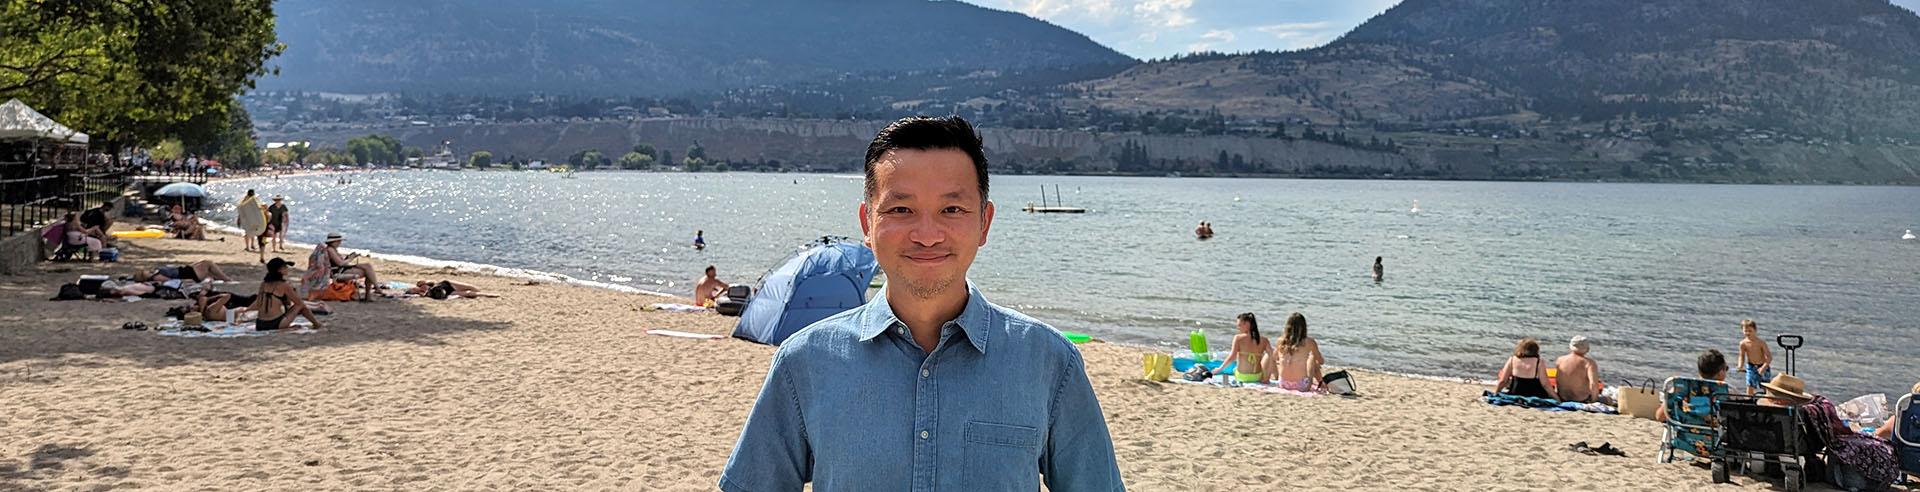 Entrepreneur standing on Okanagan lake beach